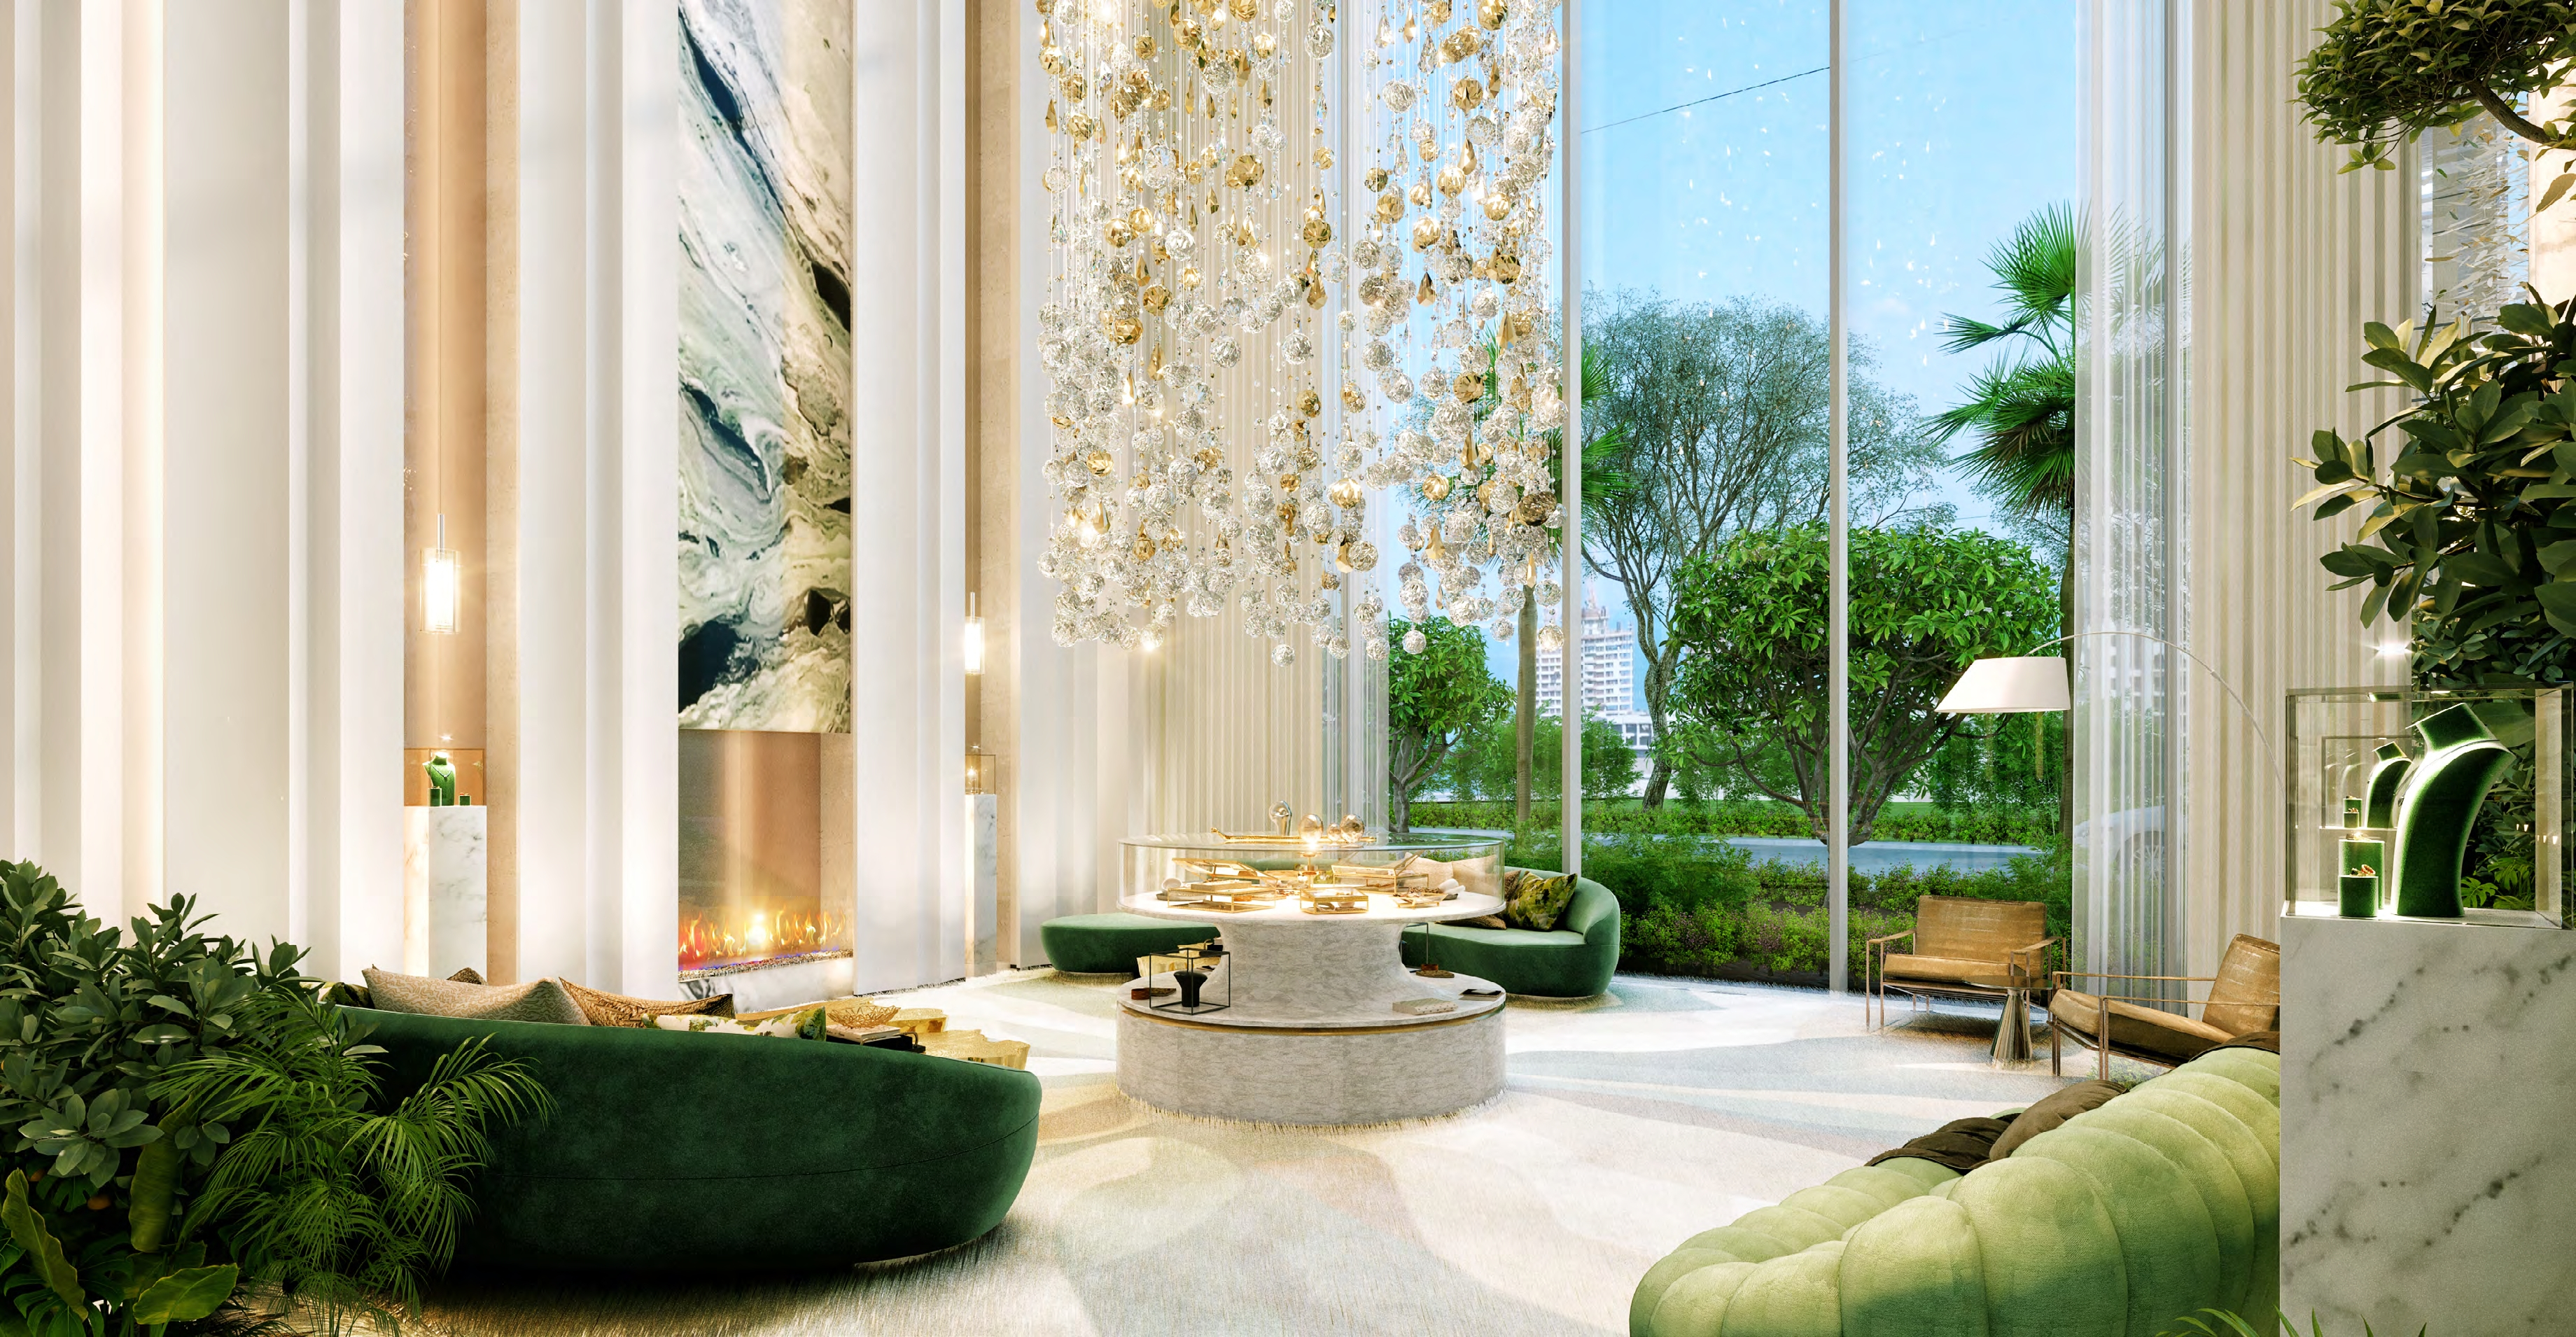 Luxury One-Bedroom Apartment in Dubai Slide Image 10